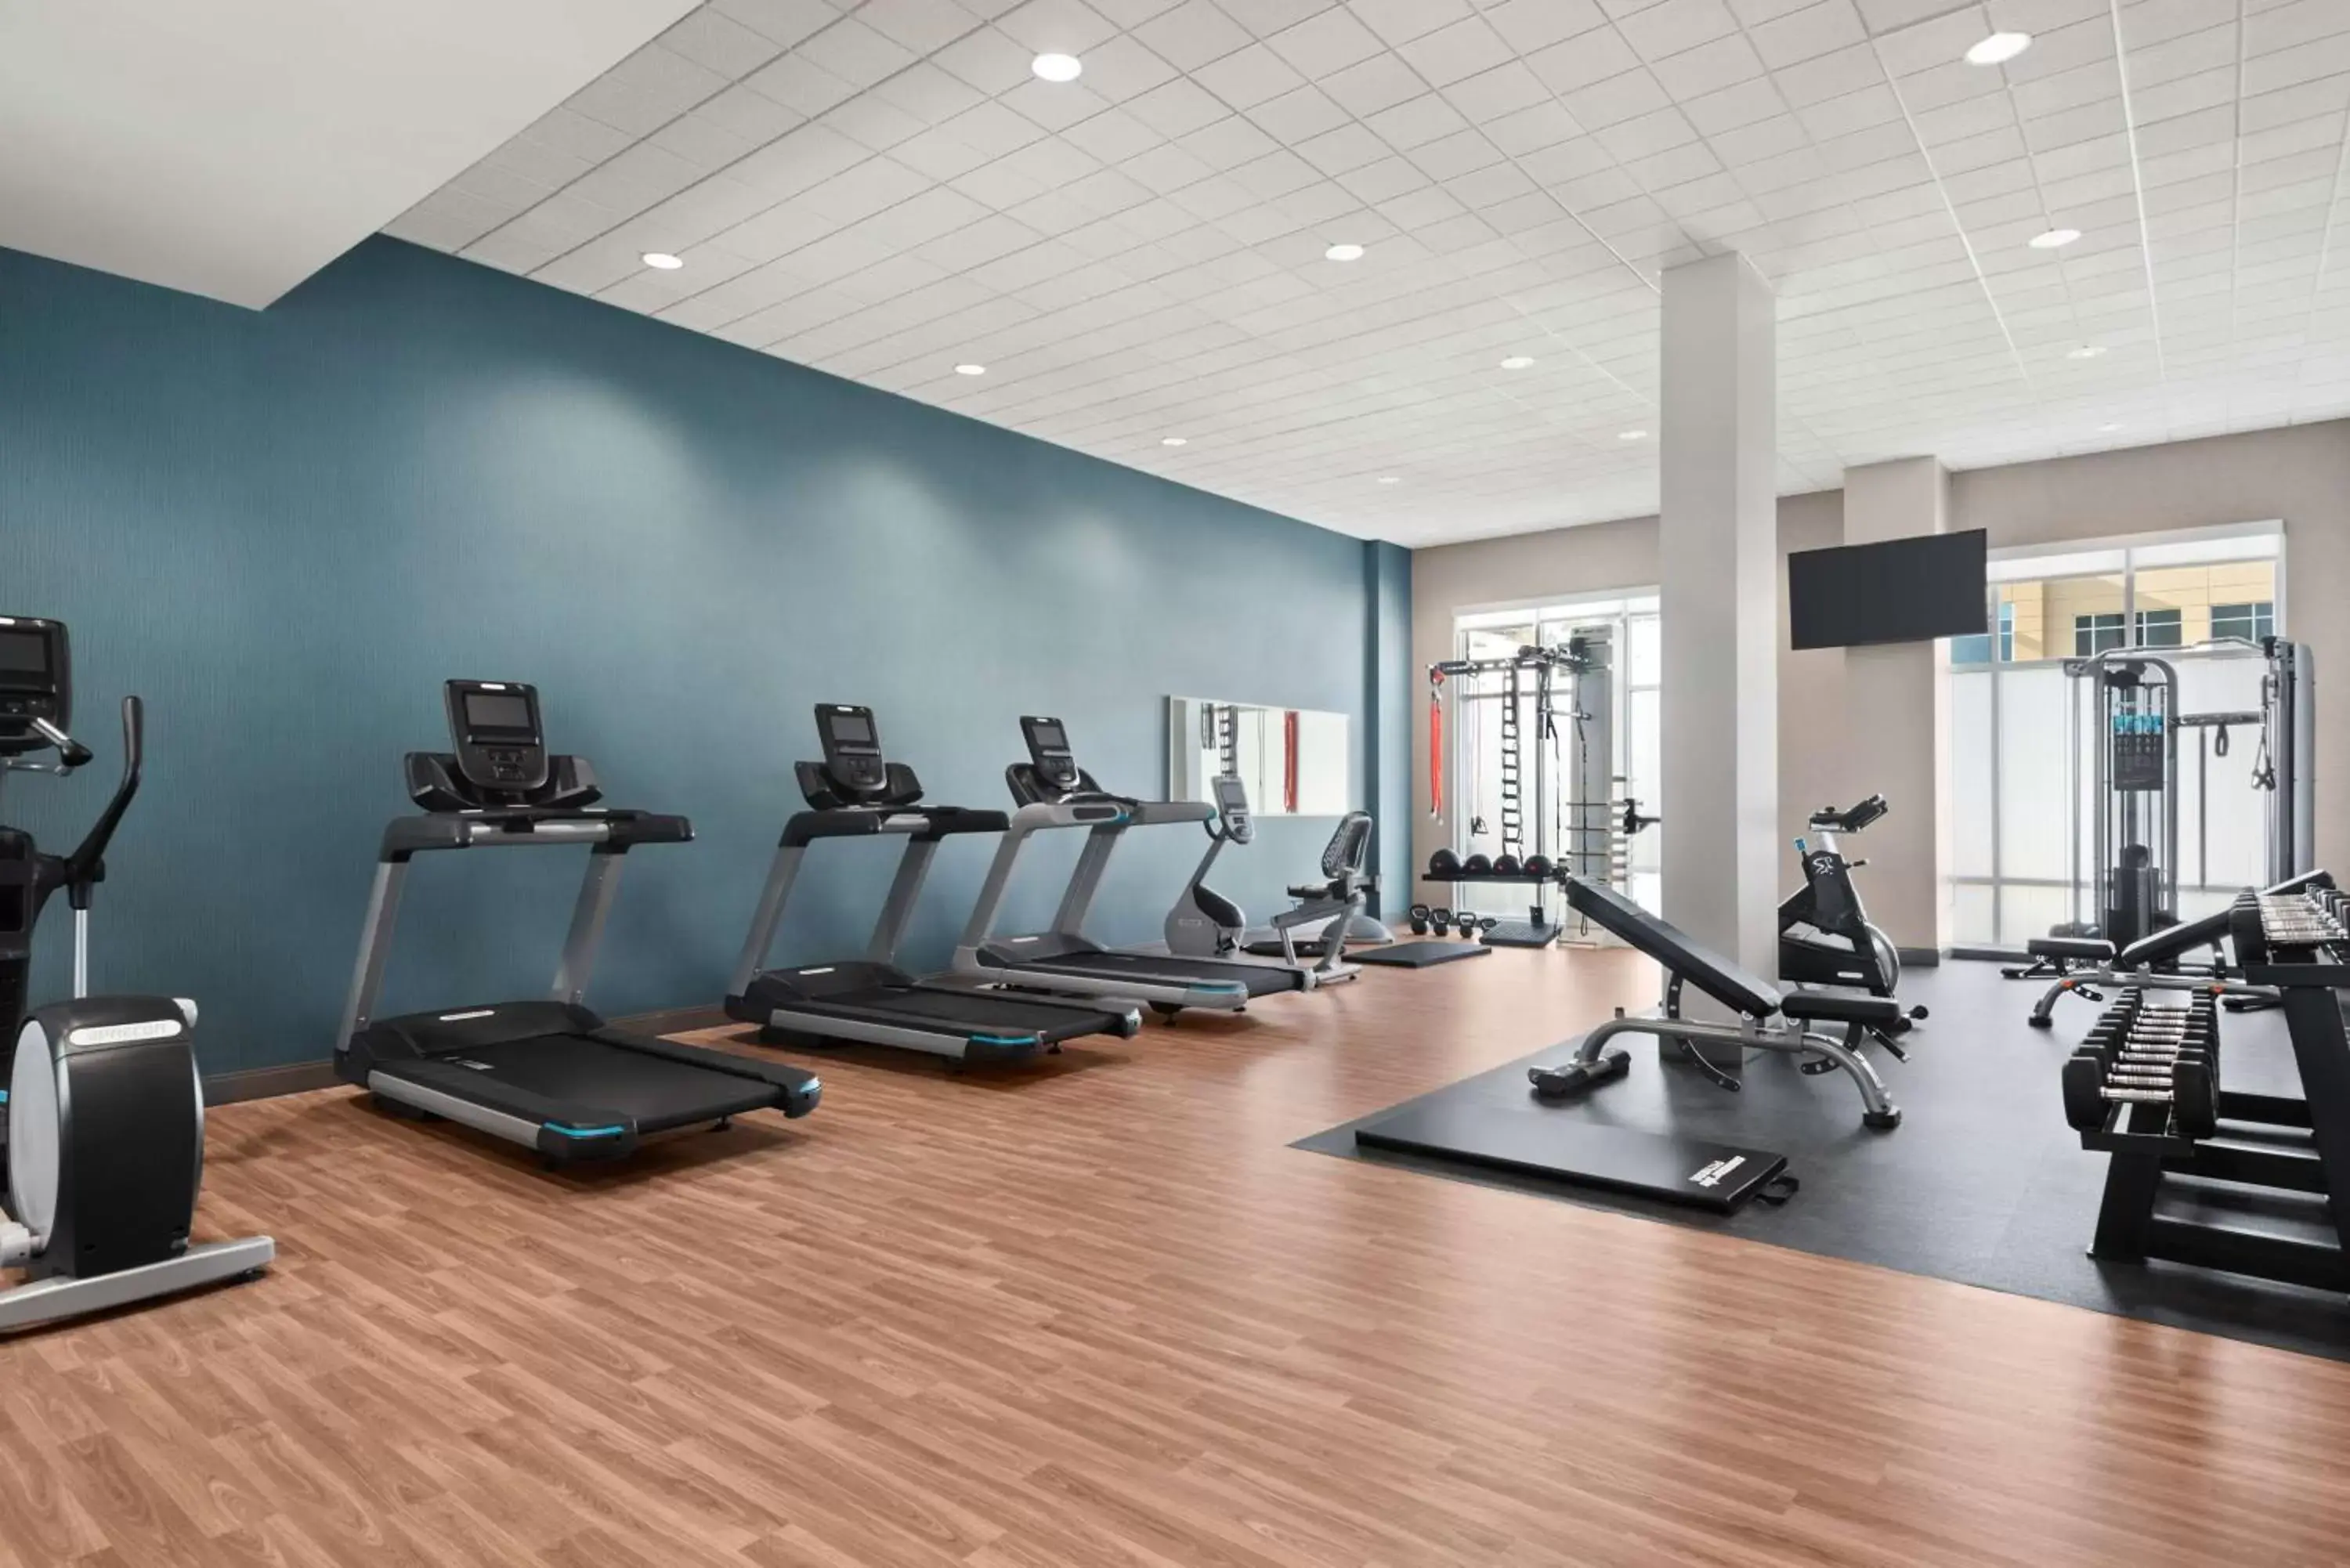 Fitness centre/facilities, Fitness Center/Facilities in Hampton Inn & Suites Kelowna, British Columbia, Canada